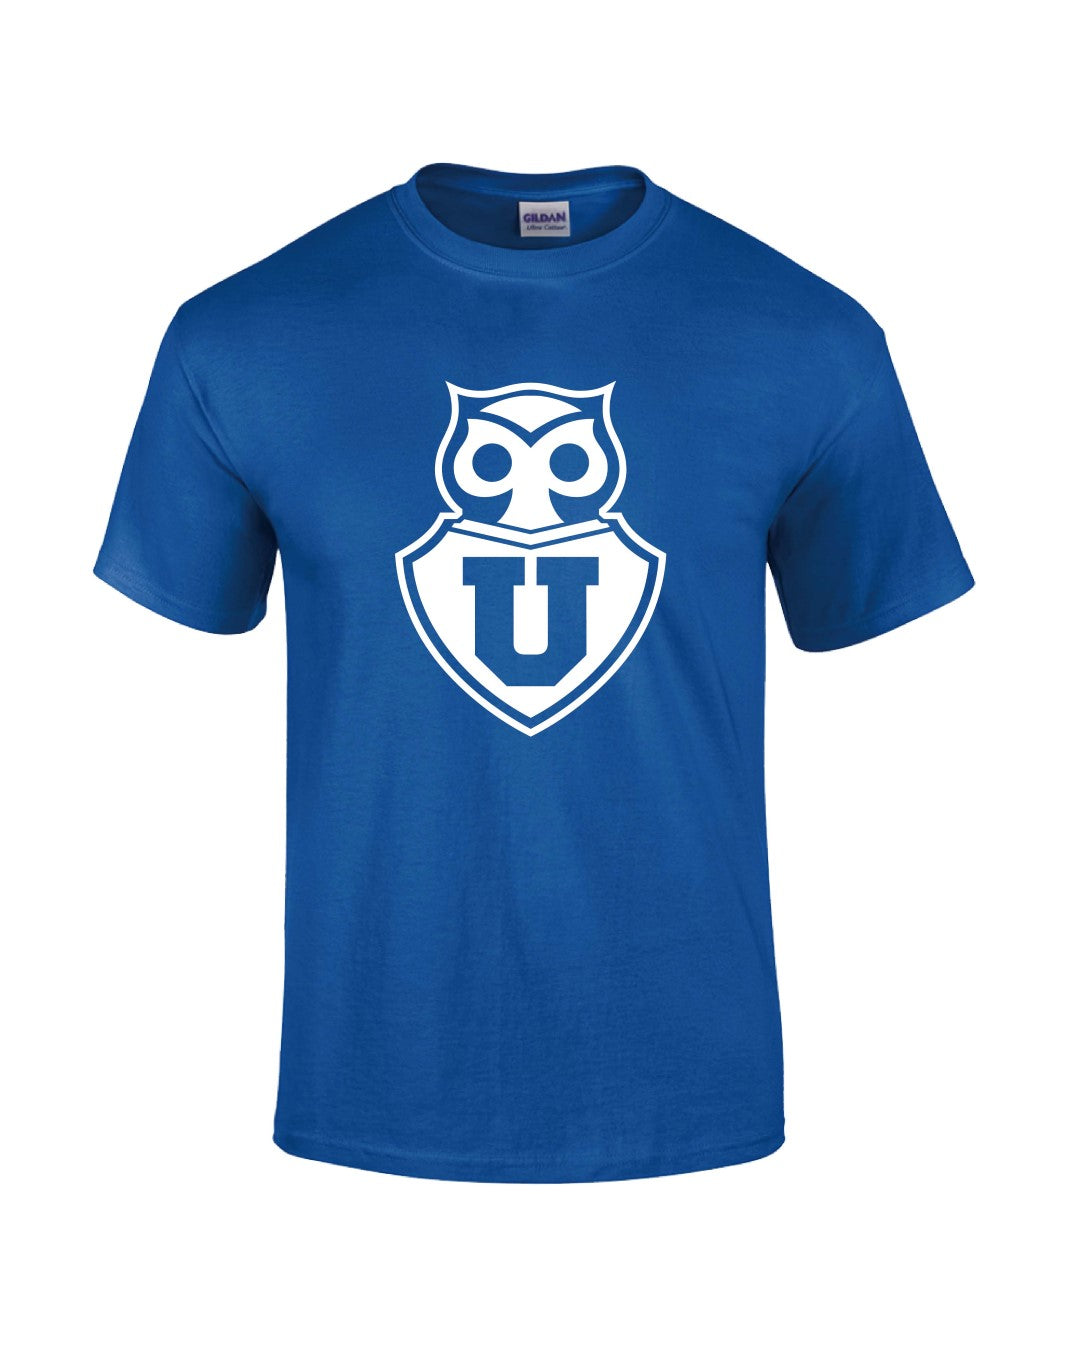 University of Chile Crest T-Shirt - Mens